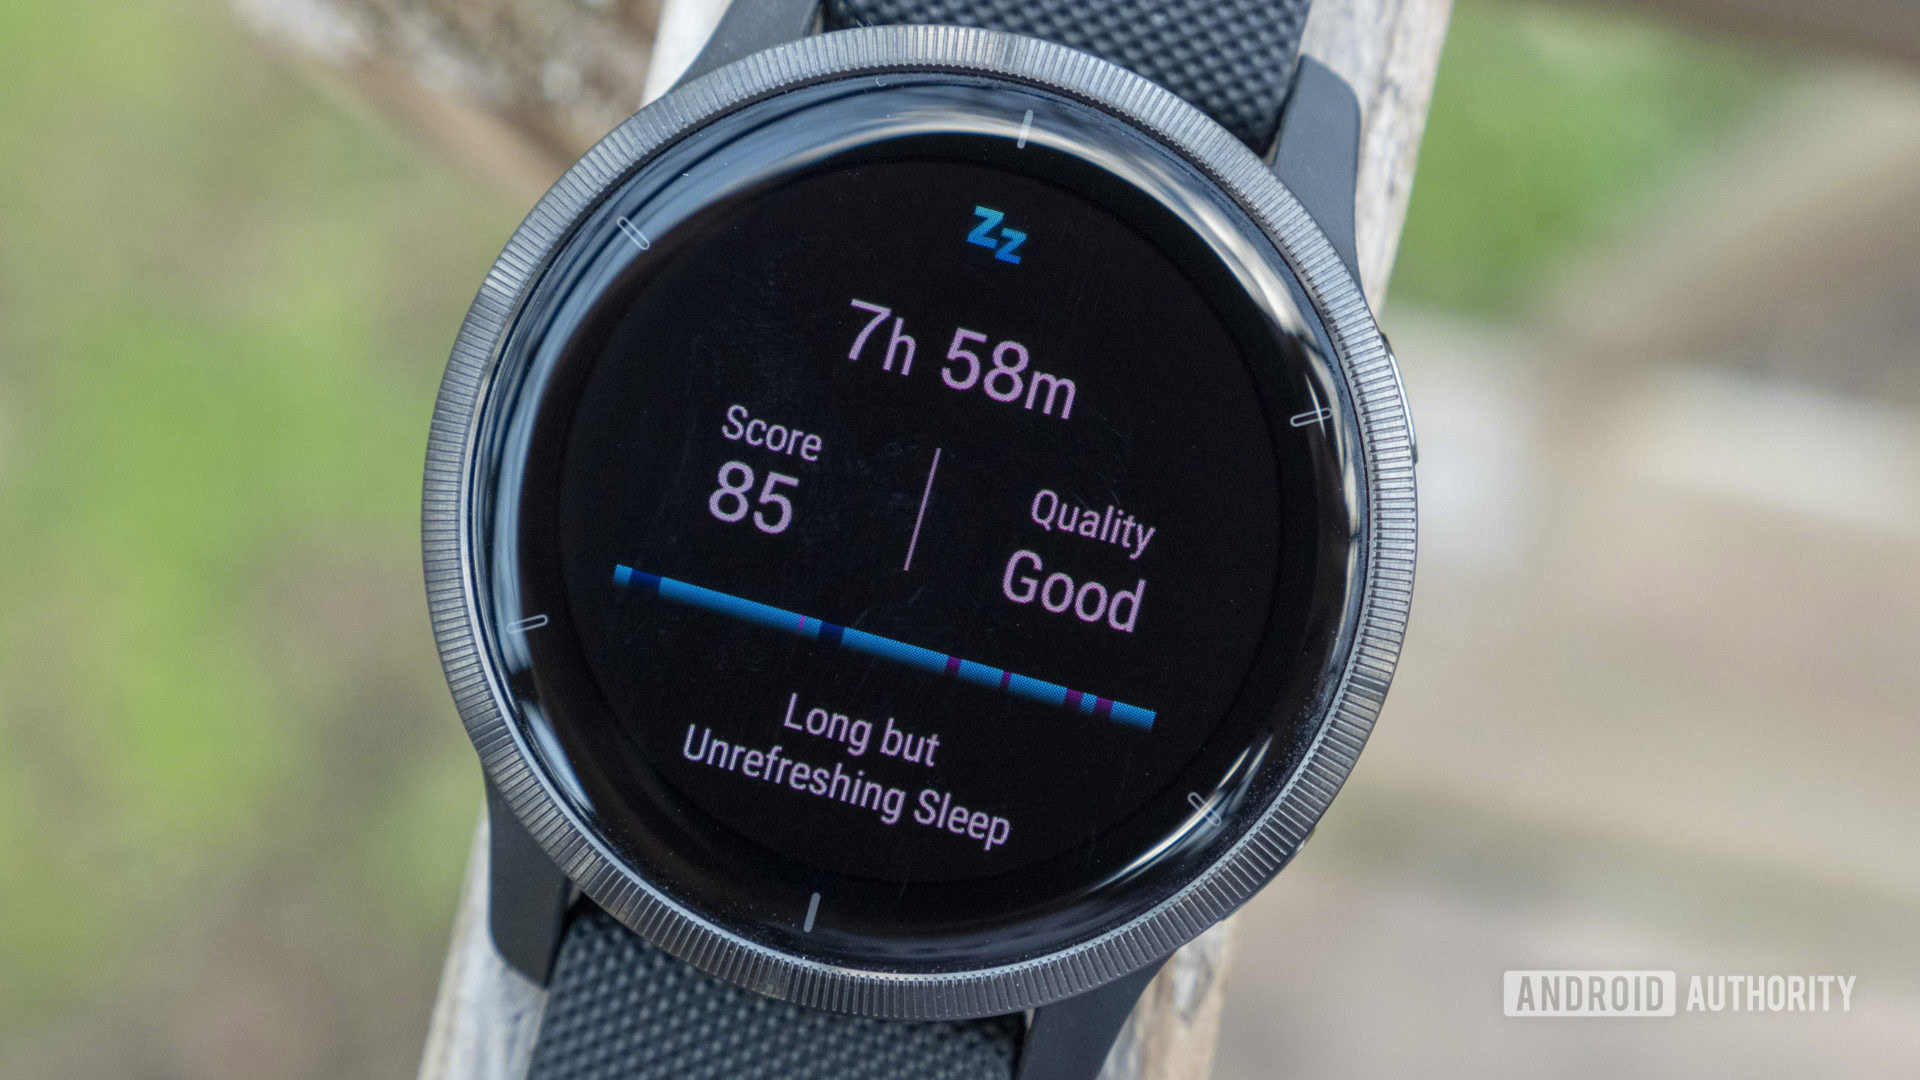 Garmin sleep tracking: to sleep deeper and - Android Authority